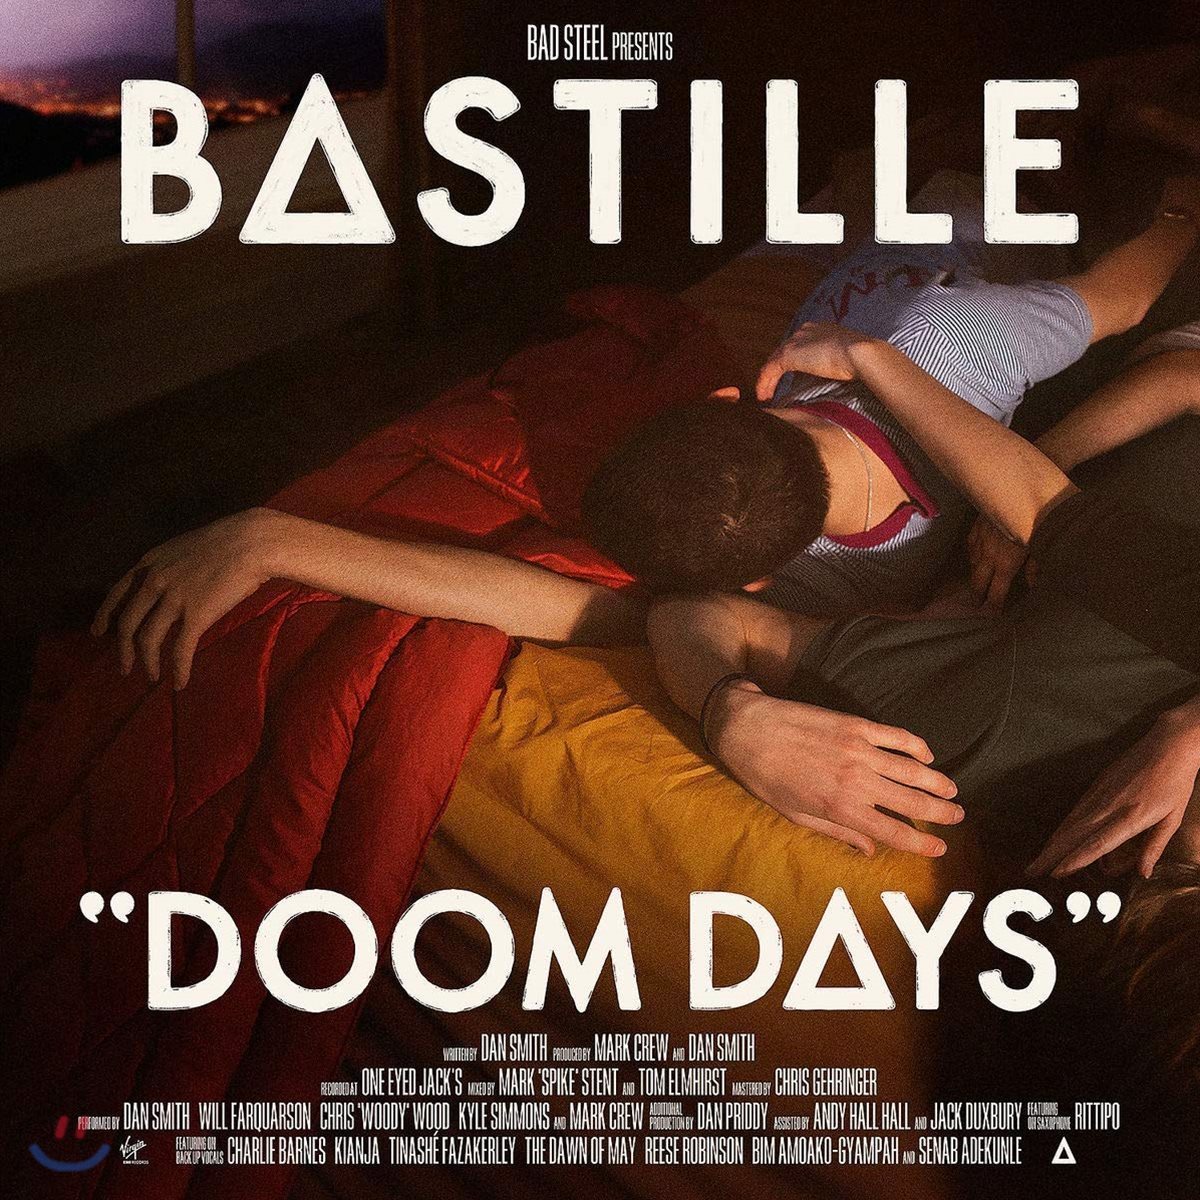 Bastille (바스틸) - Doom Days 3집 